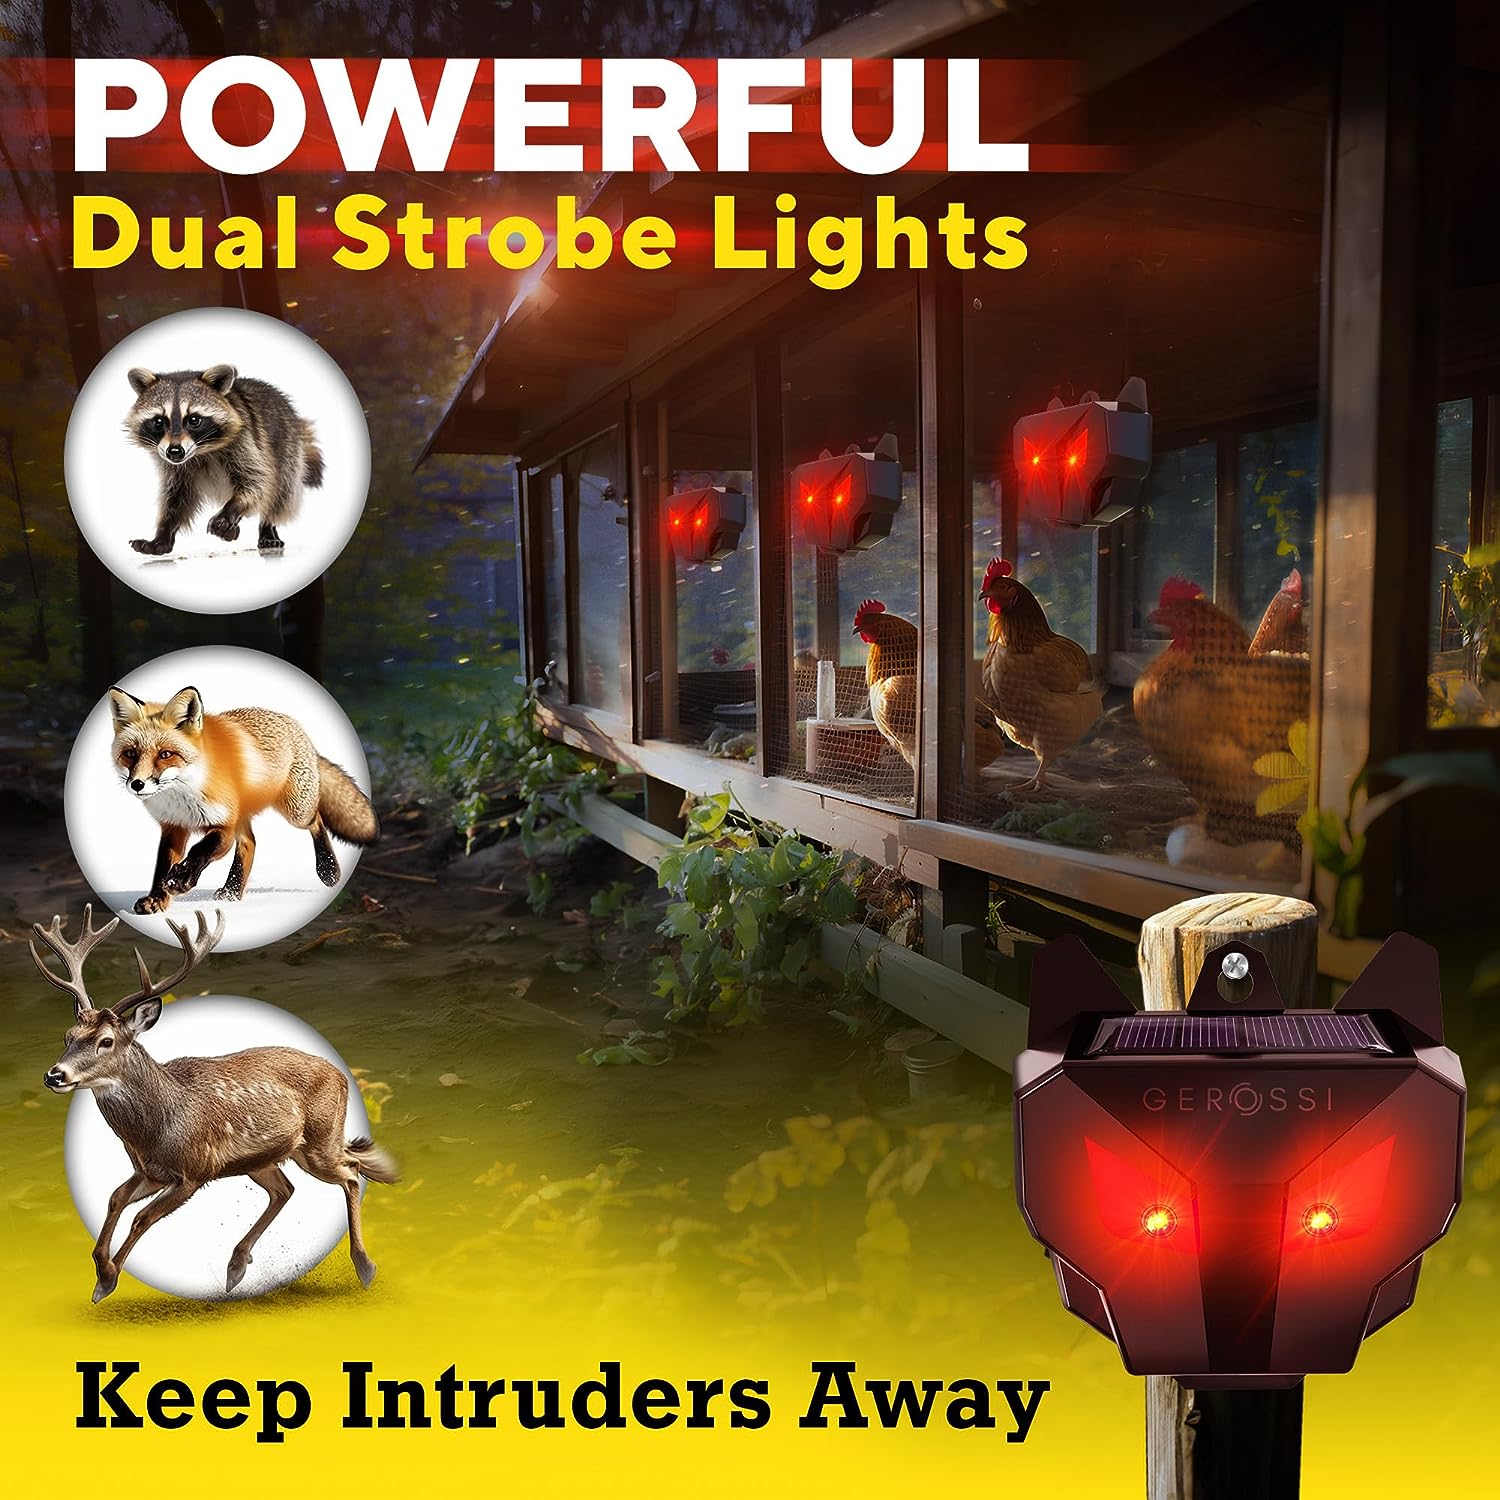 Animal Repeller Ultrasonic Deer Snake Alert Sound Alarm Wind Power Wildlife  Warning Whistle Device X7O1 